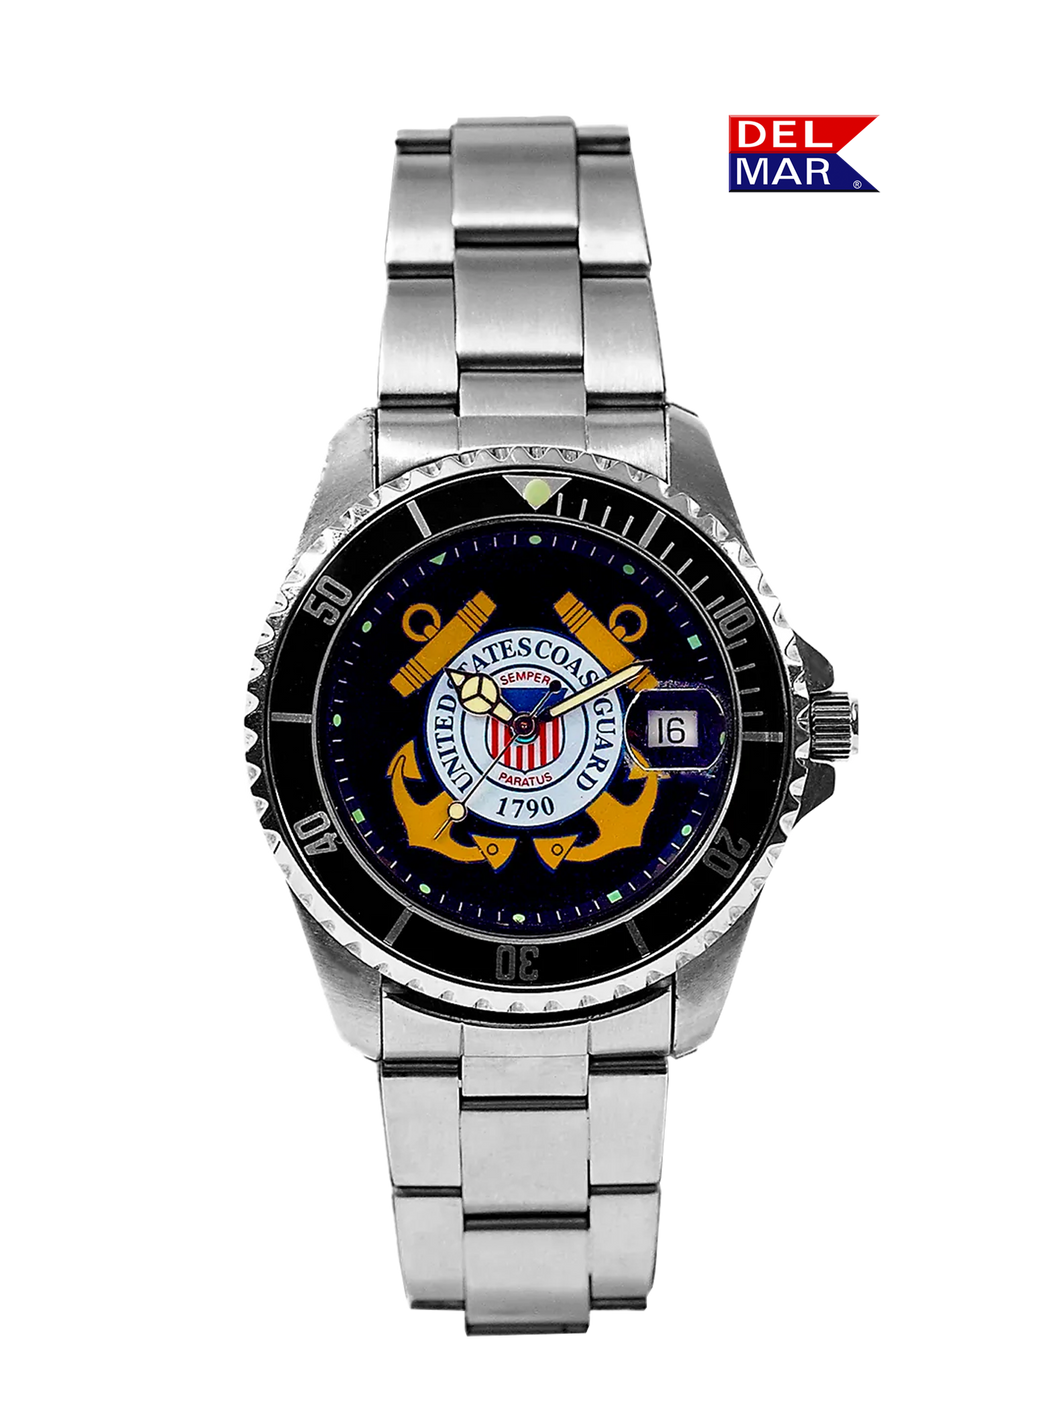 Men's Coast Guard Military Watch - Stainless Steel Bracelet #50498